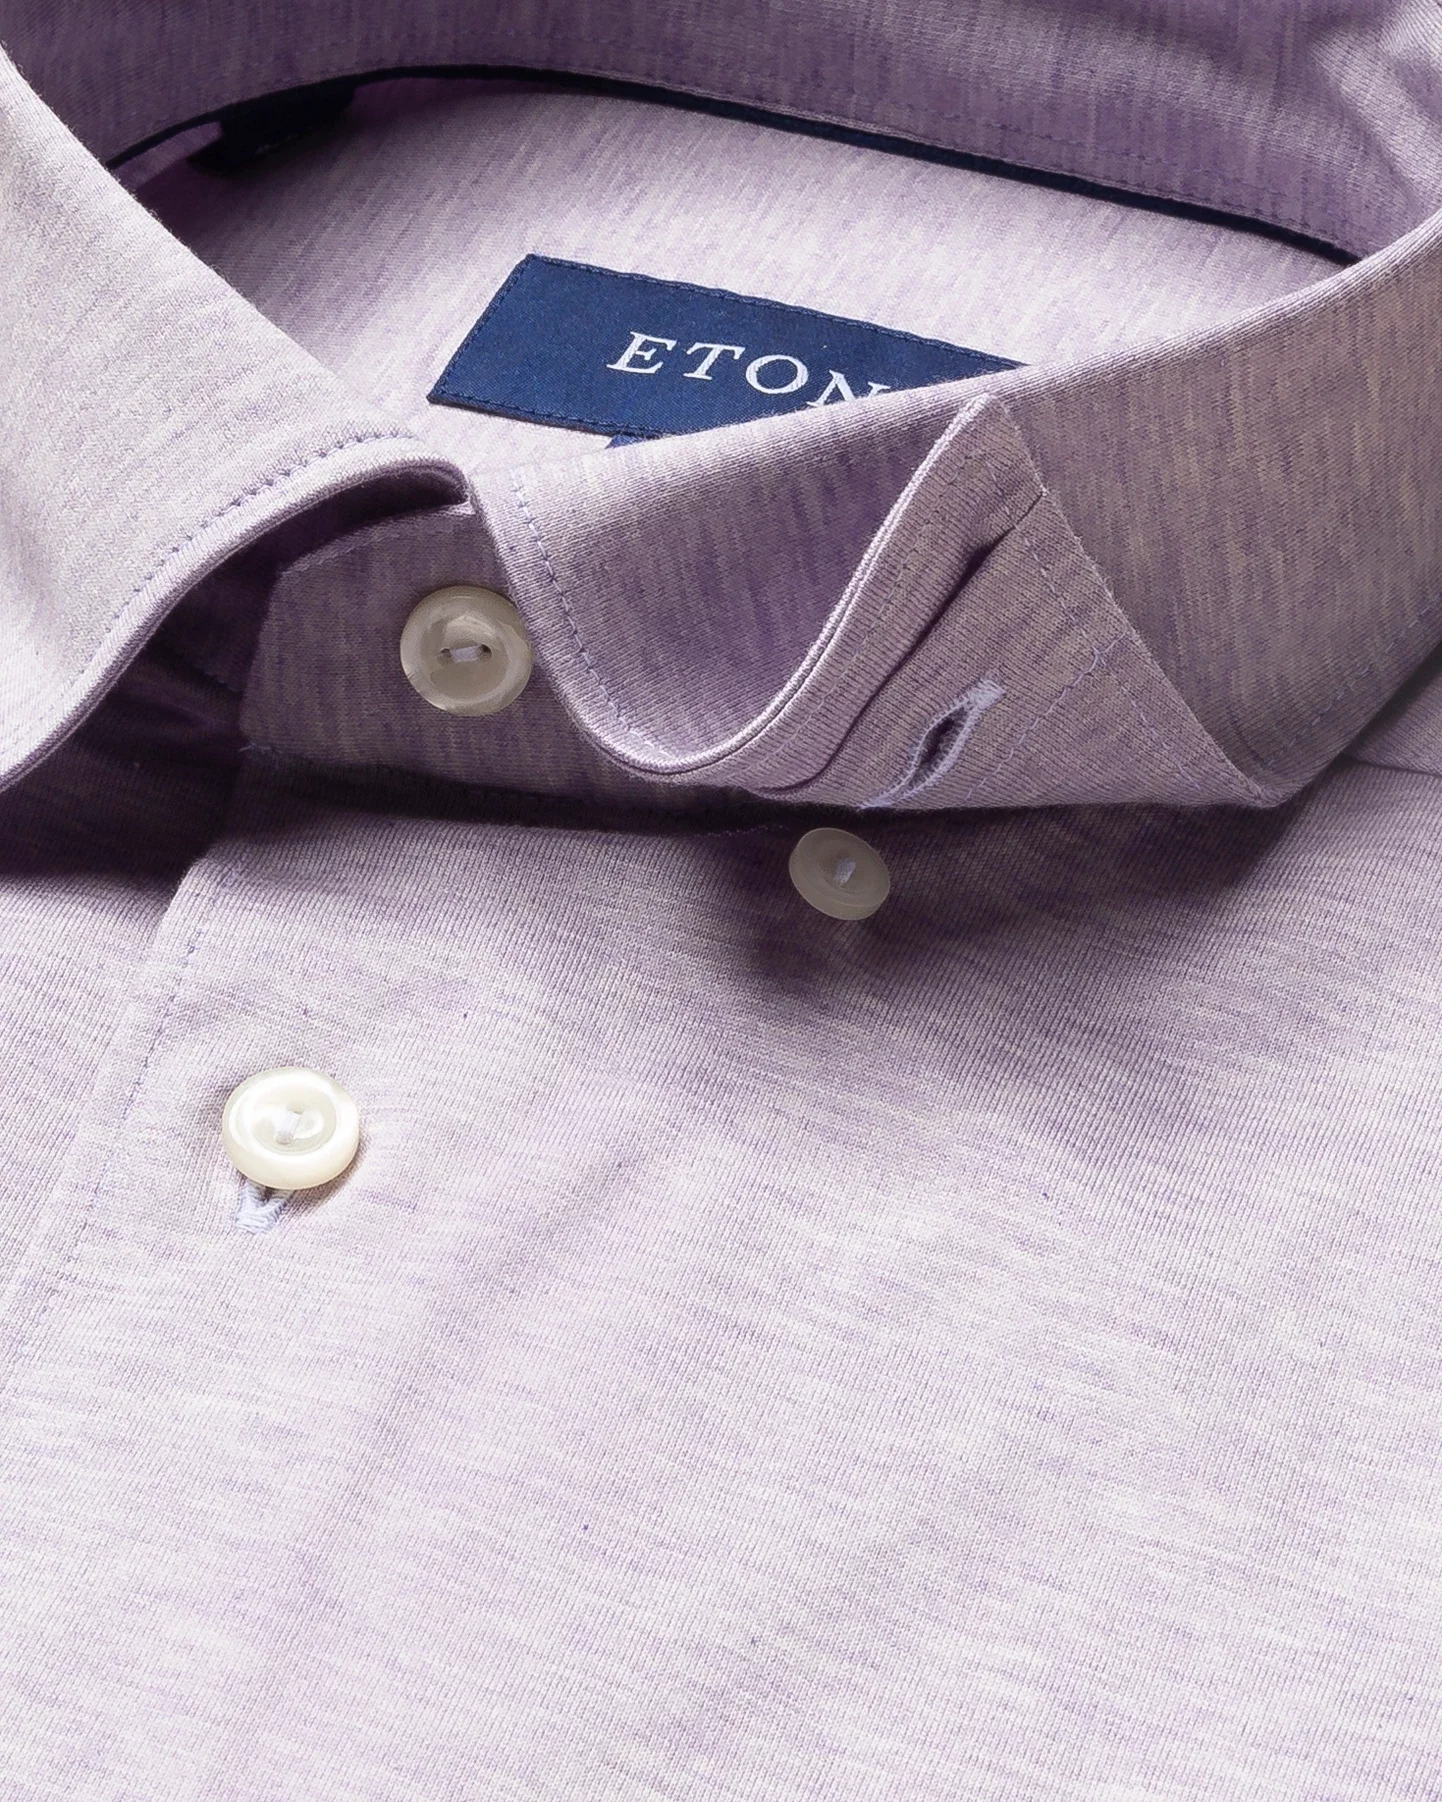 Eton - purple jersey shirt